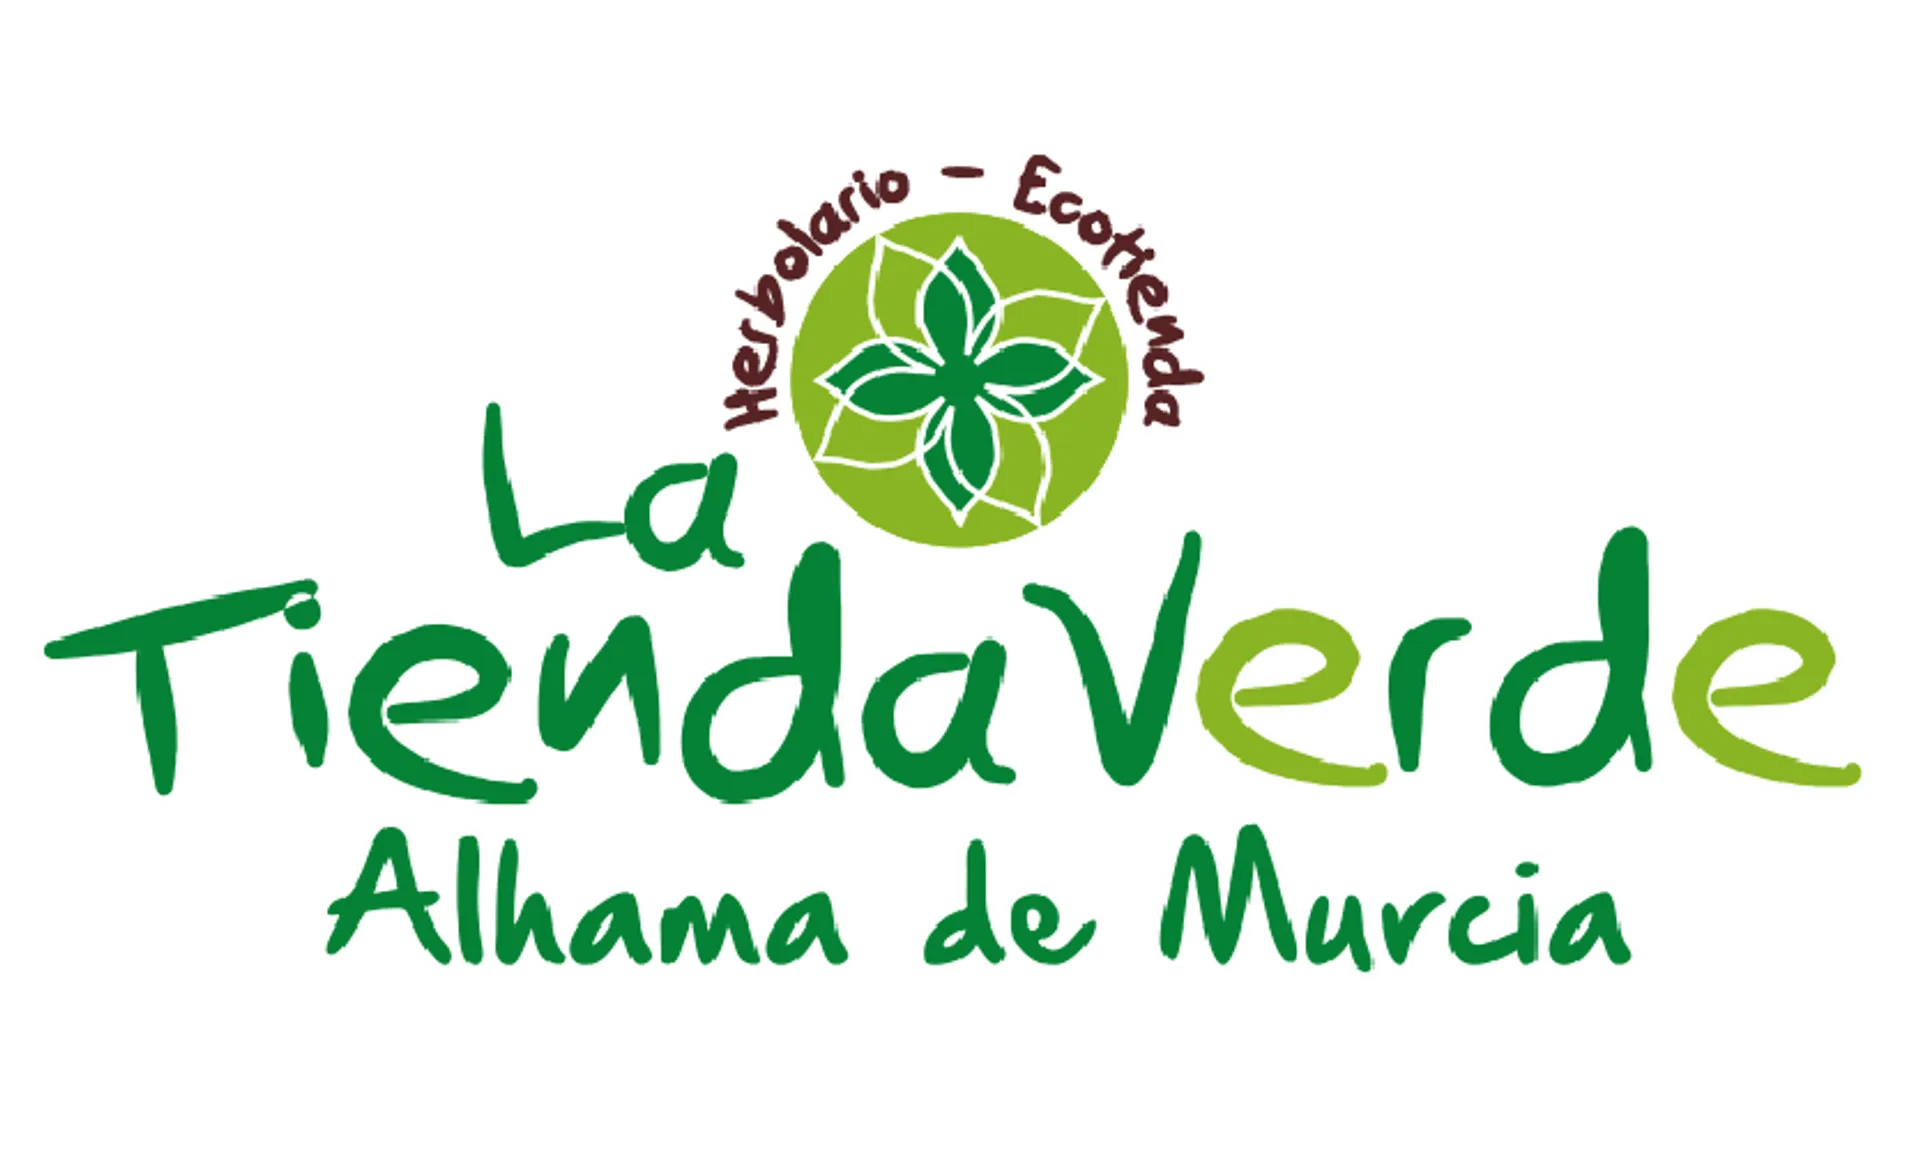 TIENDA VERDE logo